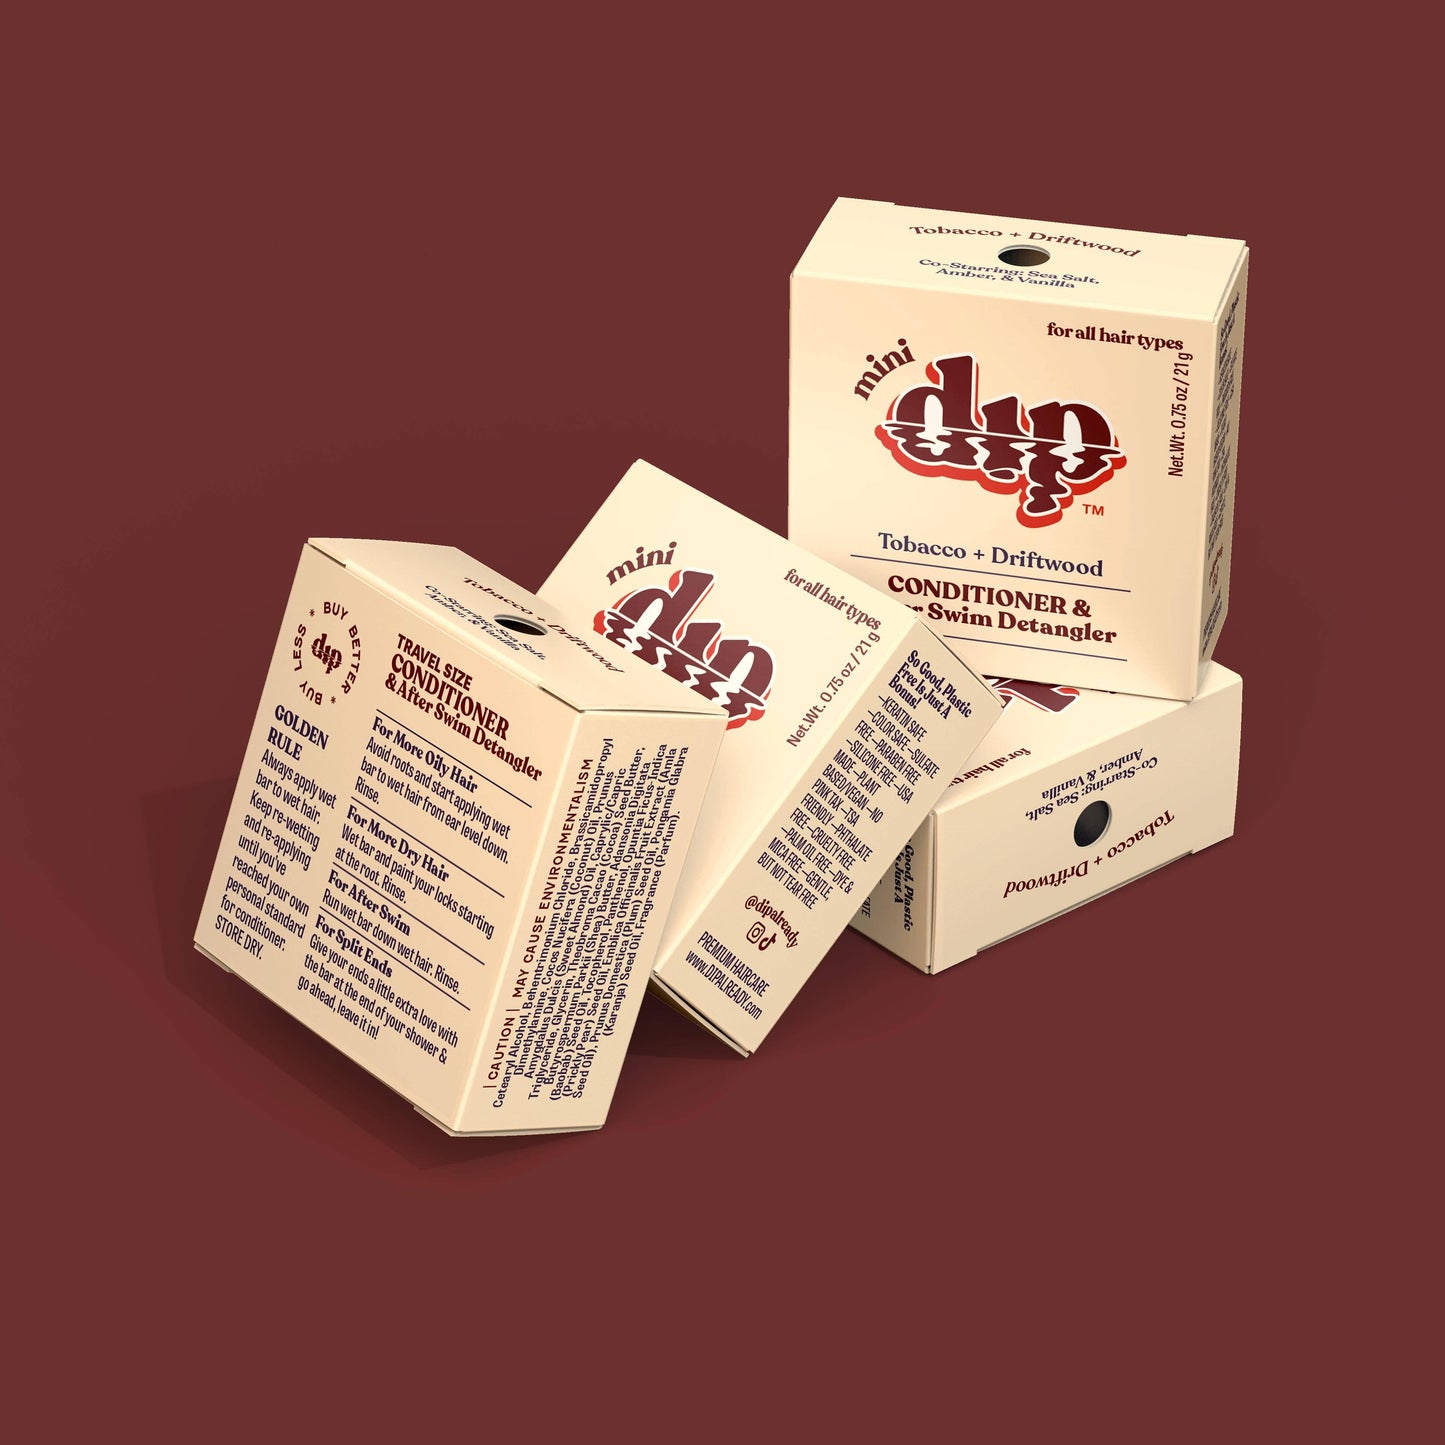 Dip - Mini Dip Conditioner & After Swim Detangler - Tobacco & Drif